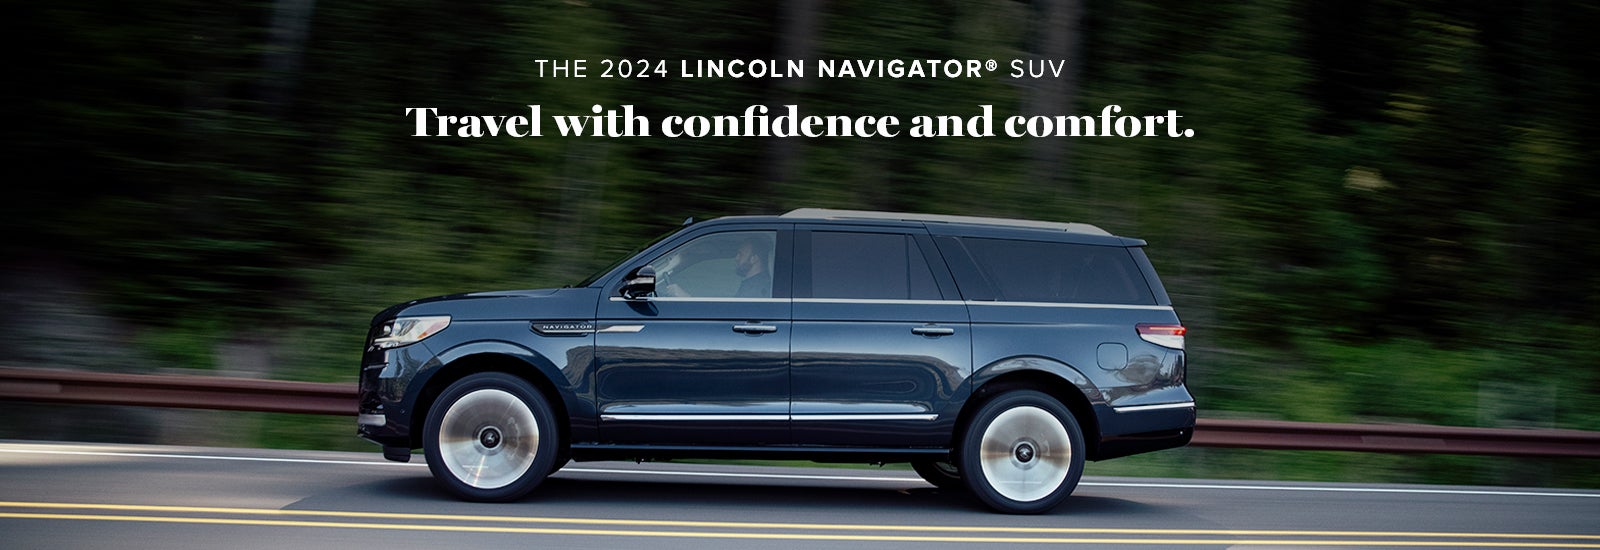 2024 Lincoln Navigator SUV